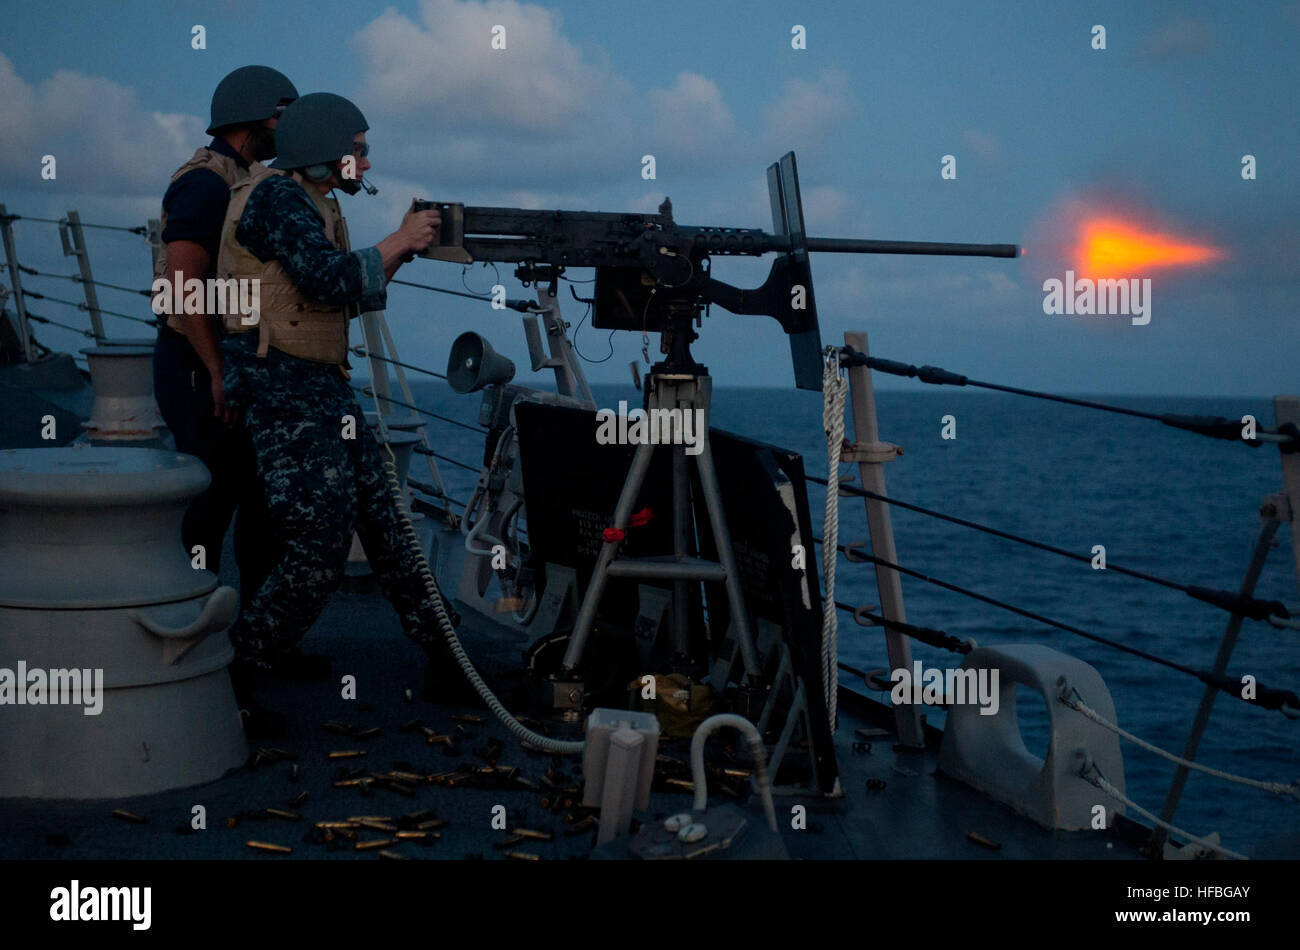 https://c8.alamy.com/comp/HFBGAY/120502-n-ov802-675-atlantic-ocean-may-2-2012-gunners-mate-3rd-class-HFBGAY.jpg